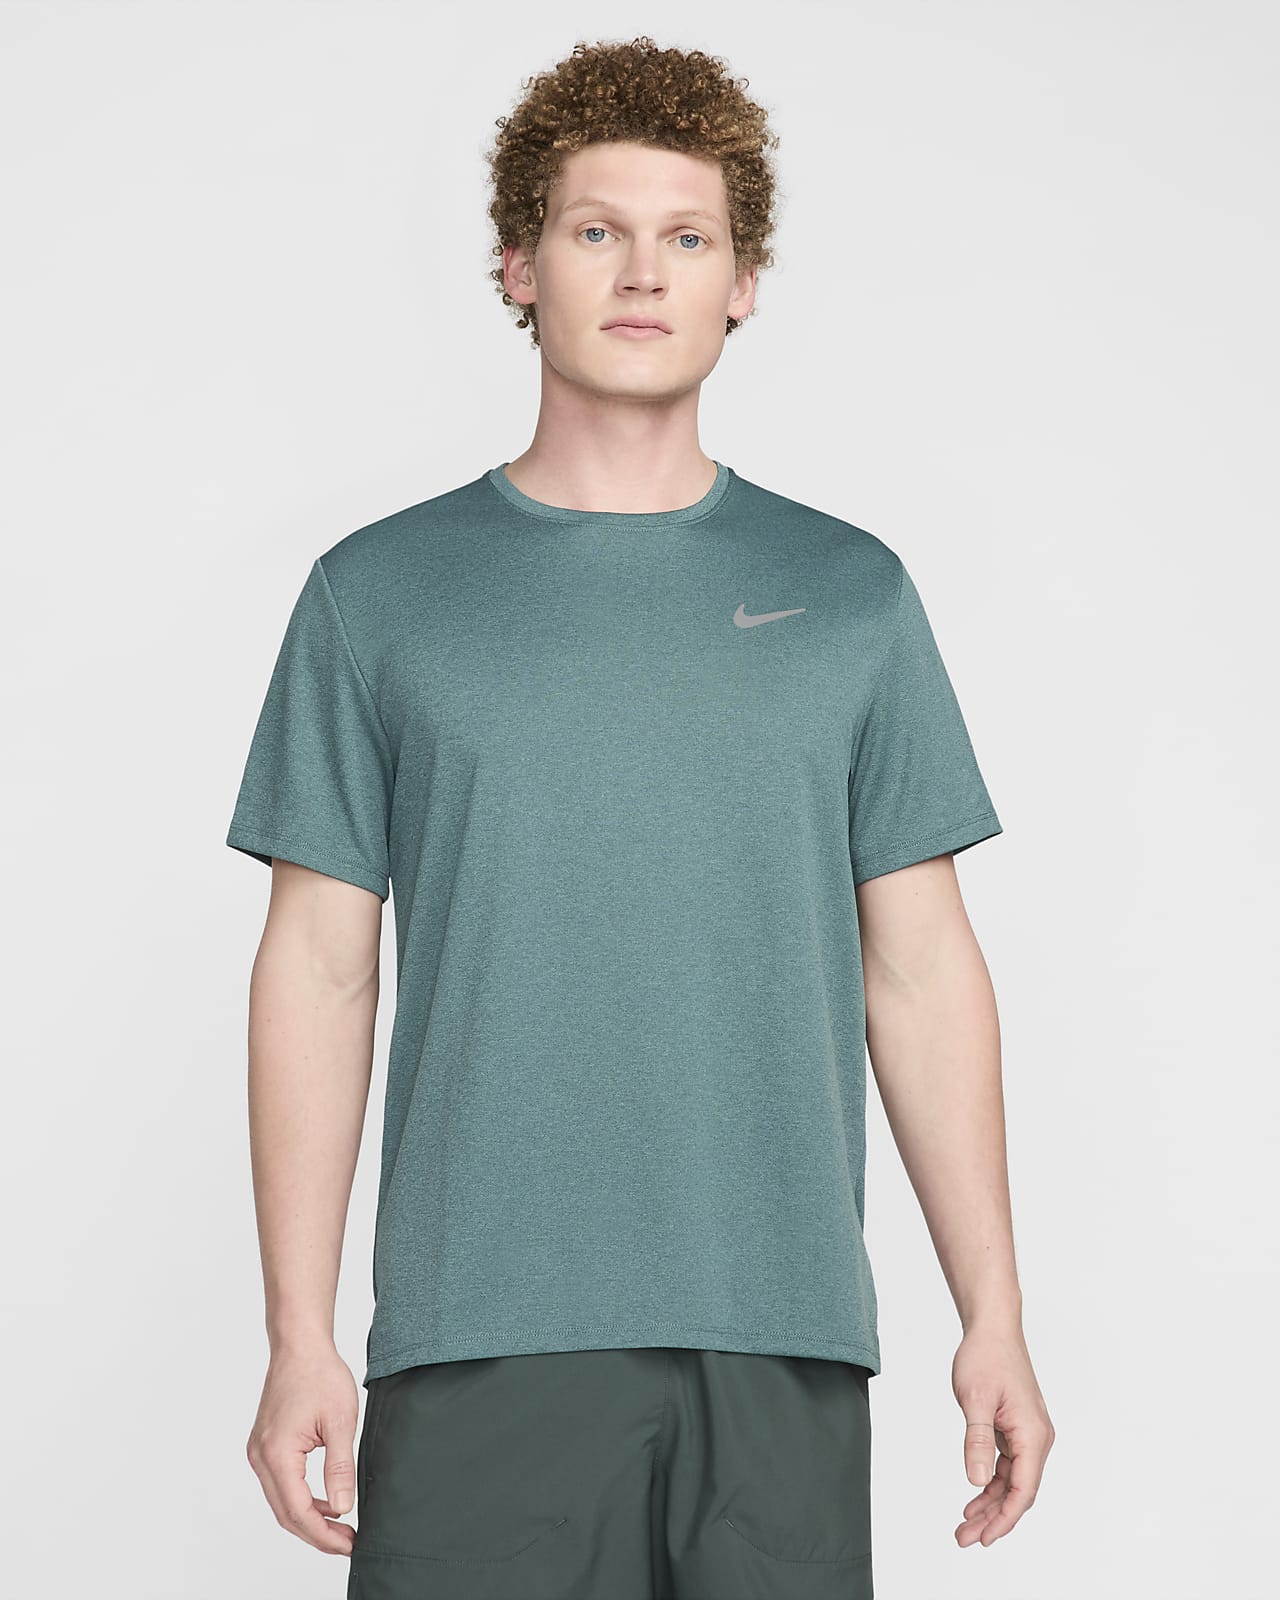 Nike Miler Dri-FIT UV rövid ujjú férfi futófelső